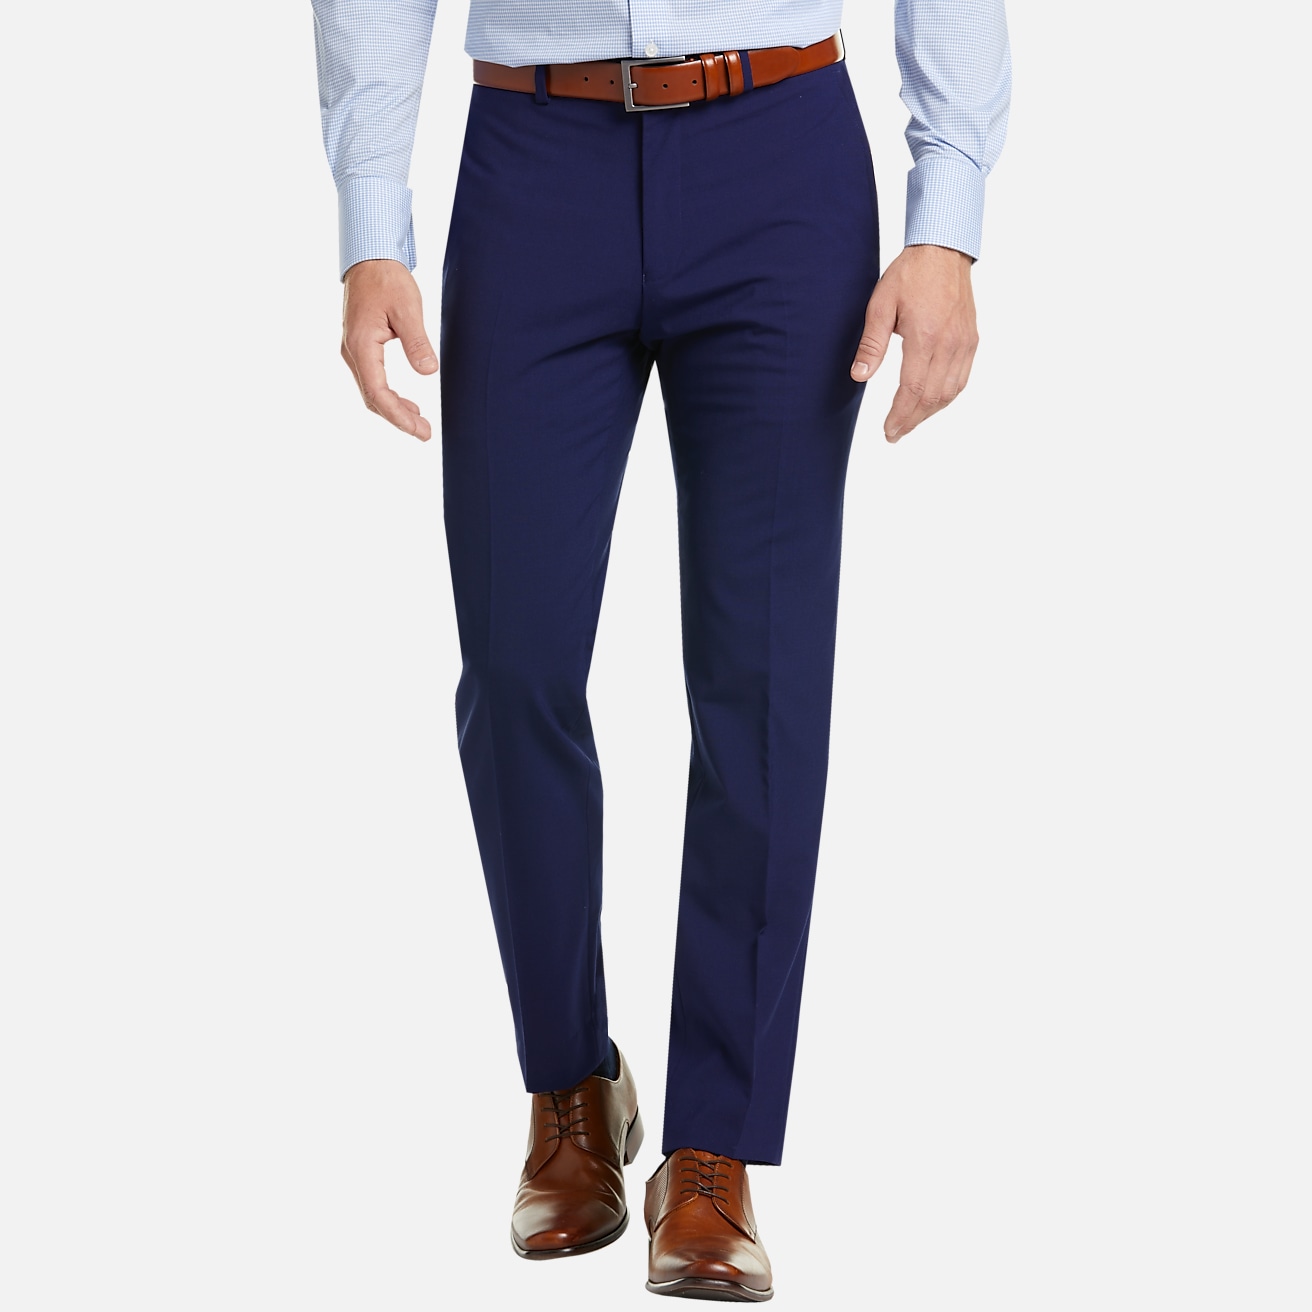 Men's Suit Pants & Separate Pants - Wool Dress Pants & Slim Fit